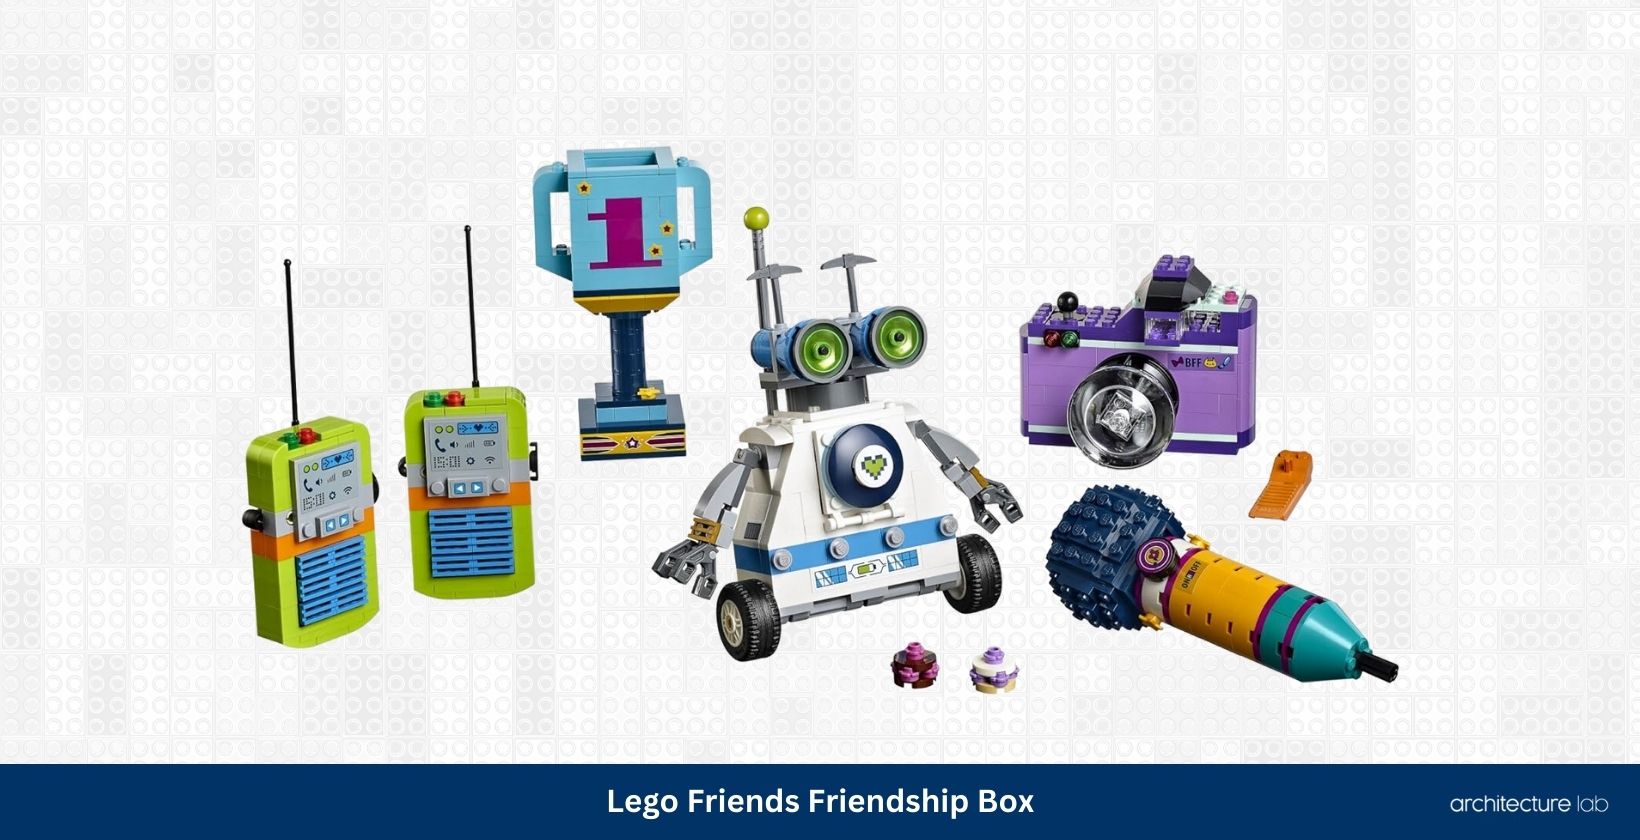 Lego friends friendship